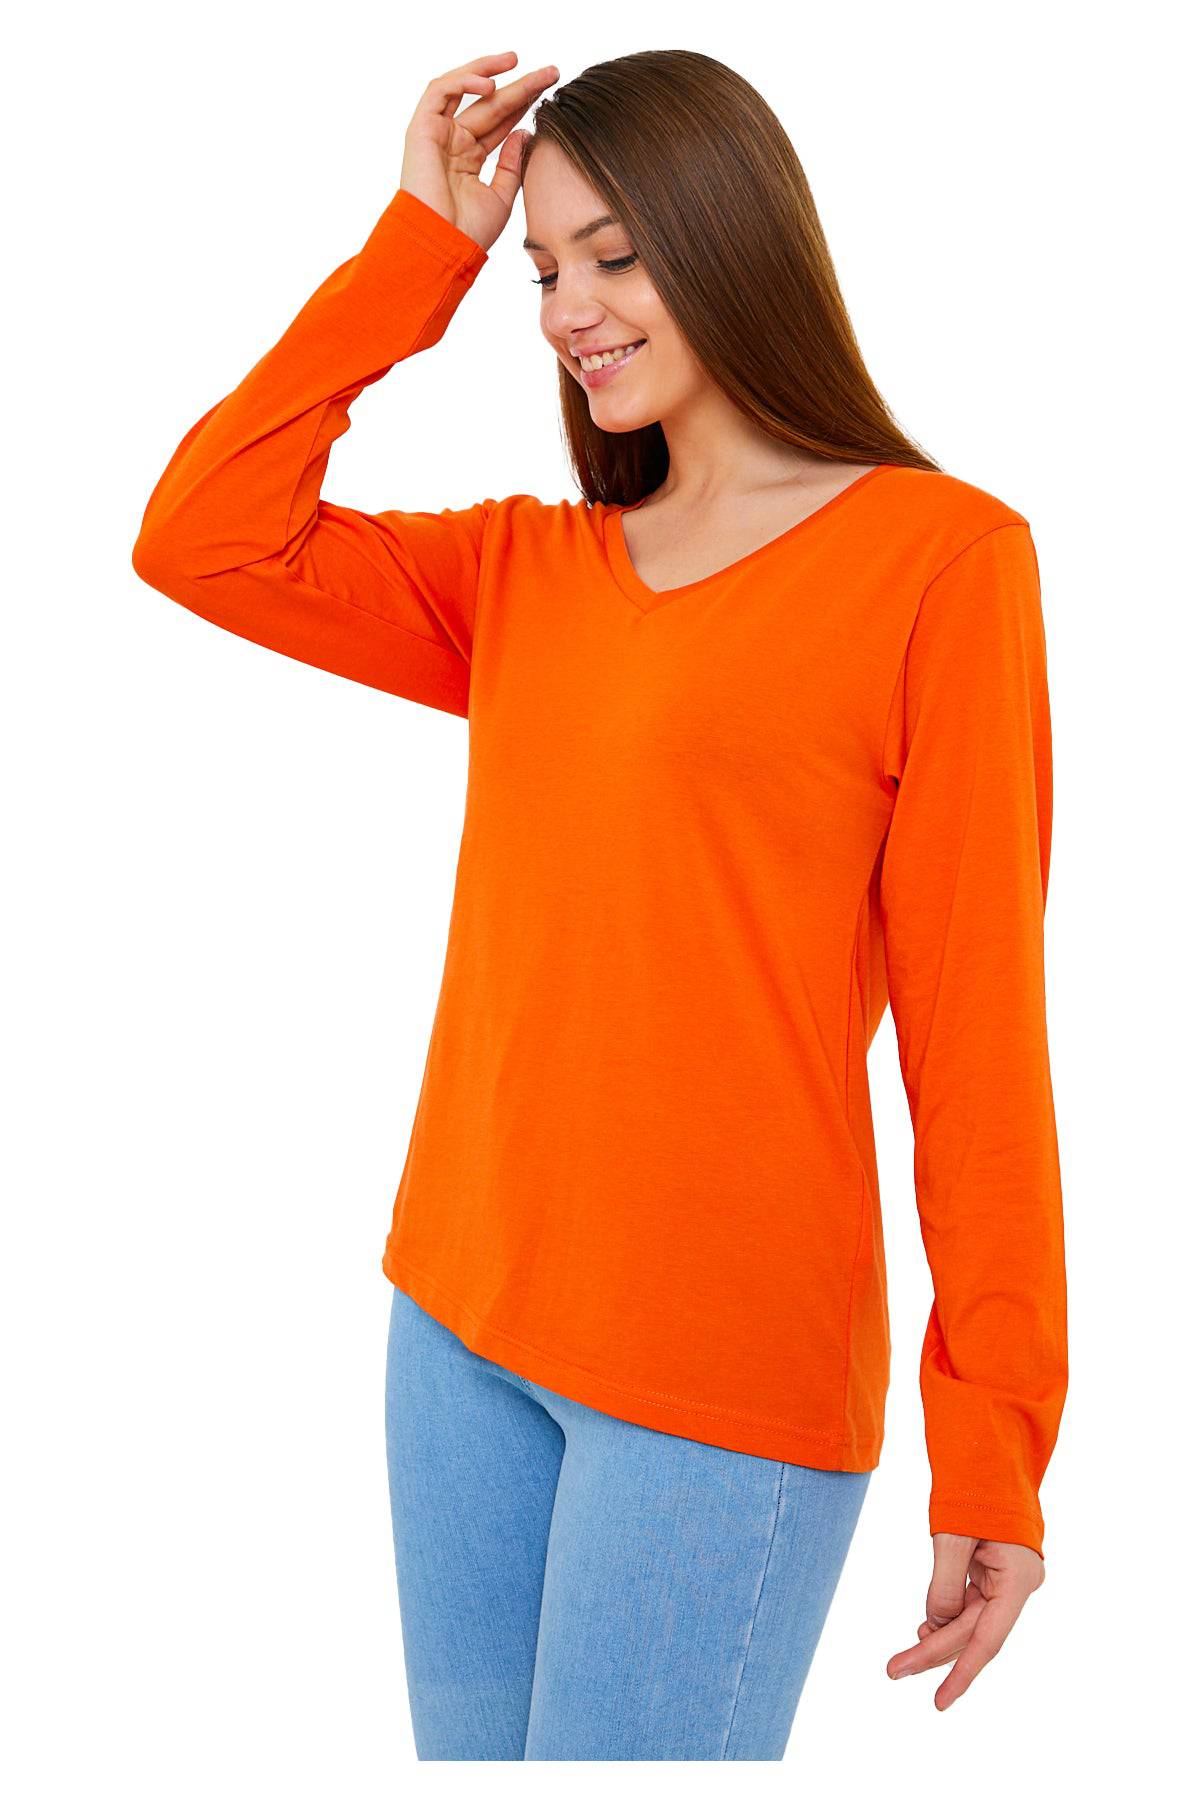 Long Sleeve V-Neck Shirts for Women & Girls - Colorful Pima Cotton-64